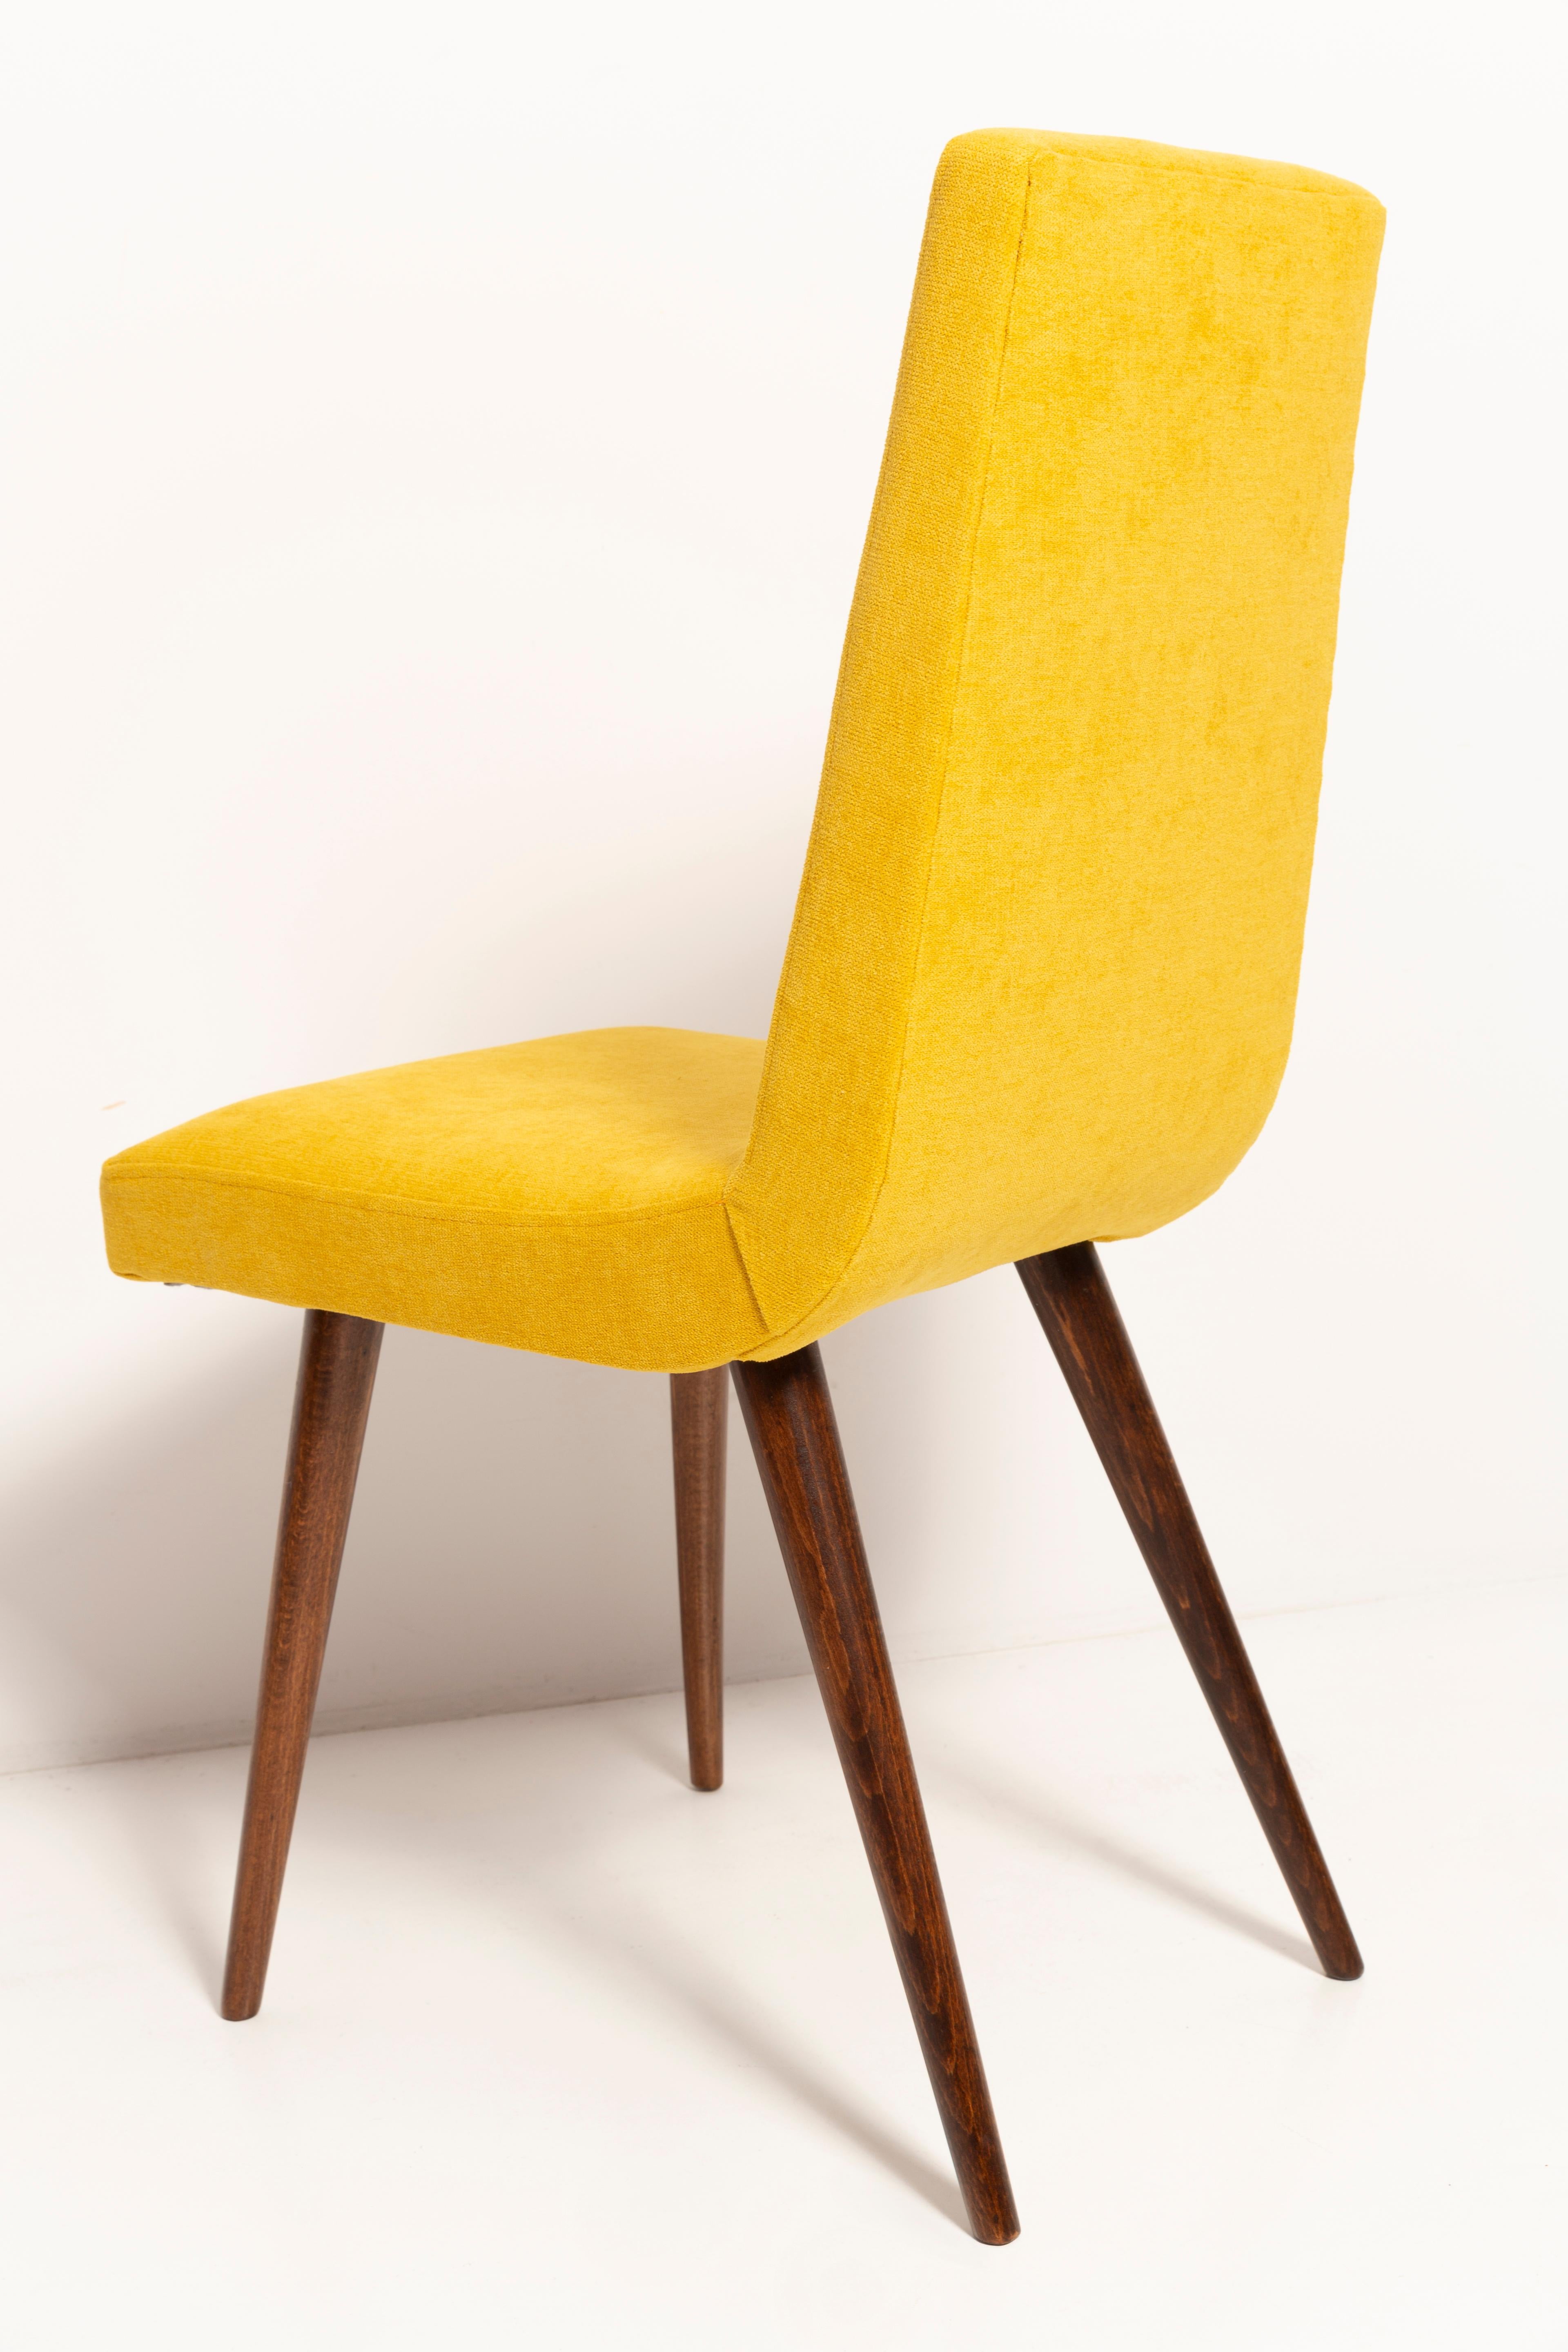 Textile Six 20th Century Mustard Yellow Wool Chair, Rajmund Halas Europe, 1960s For Sale